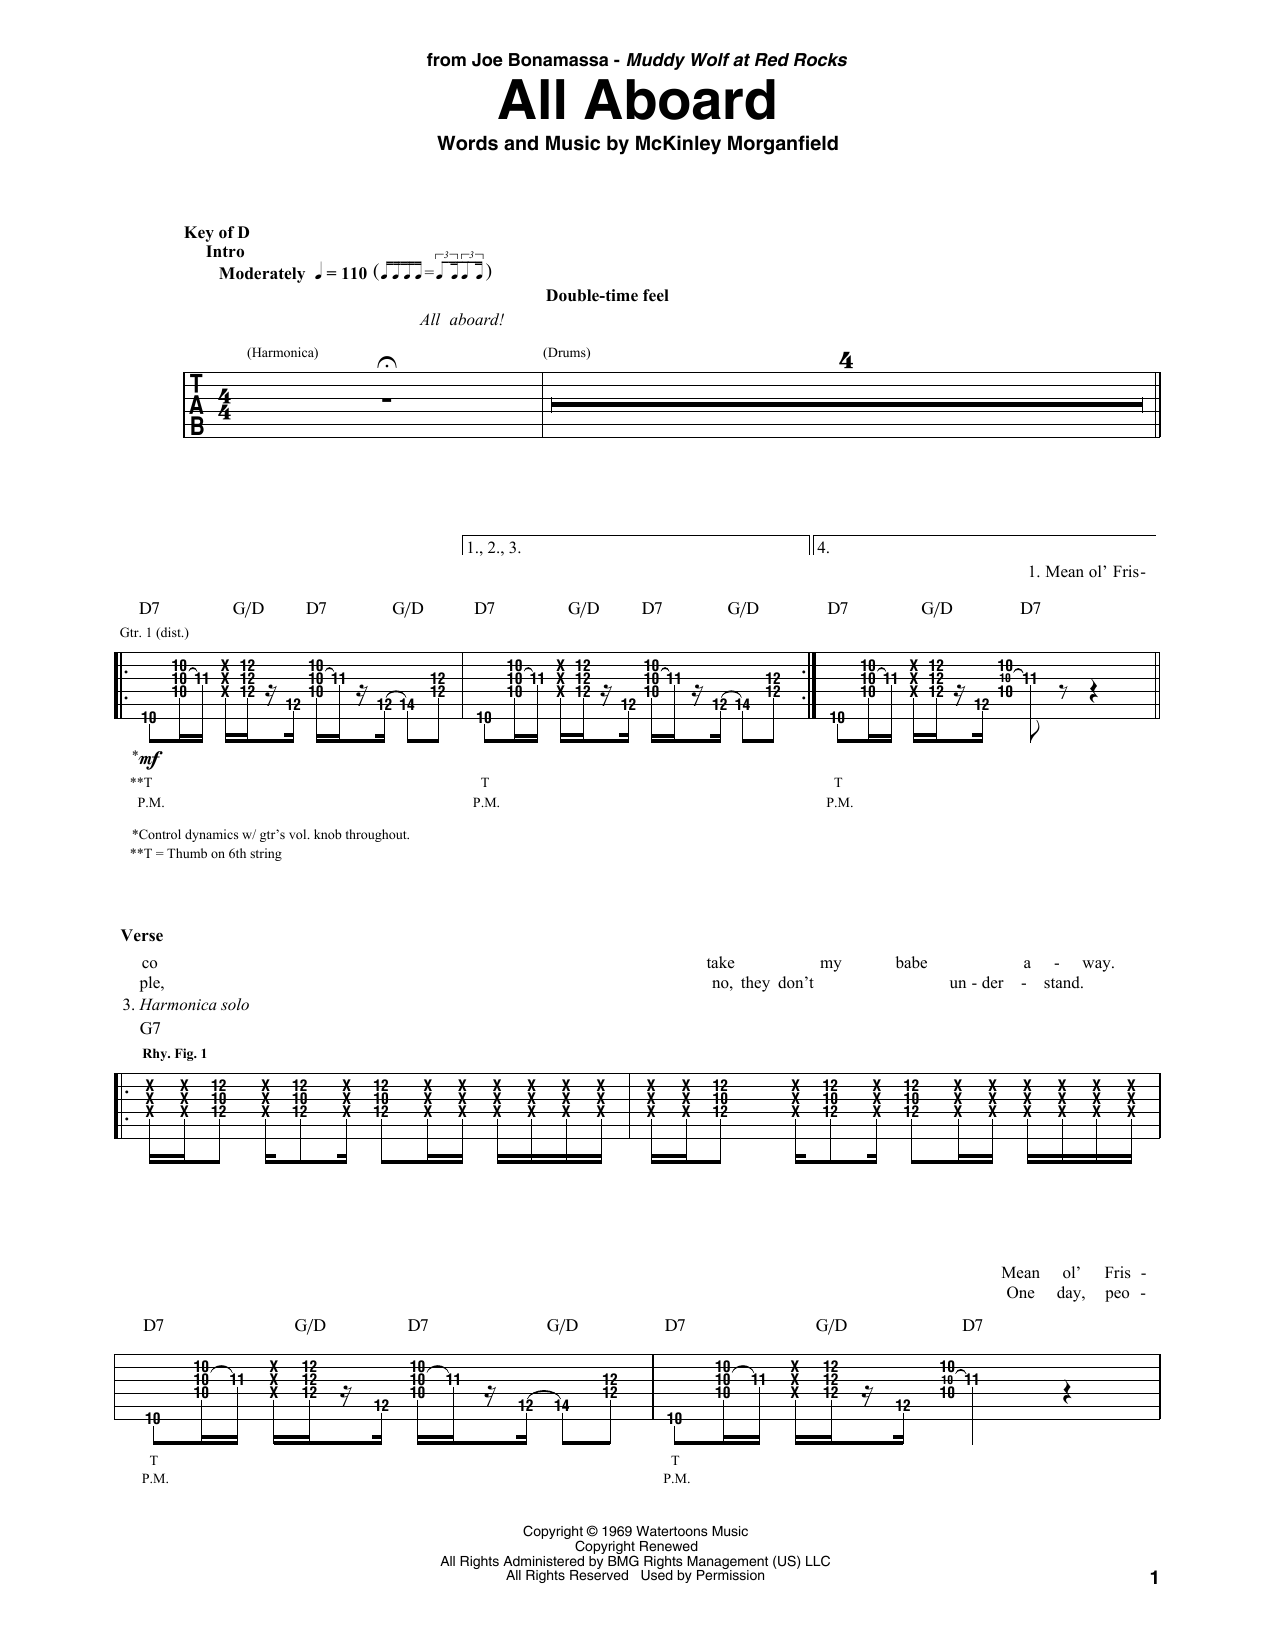 Download Joe Bonamassa All Aboard Sheet Music and learn how to play Guitar Tab PDF digital score in minutes